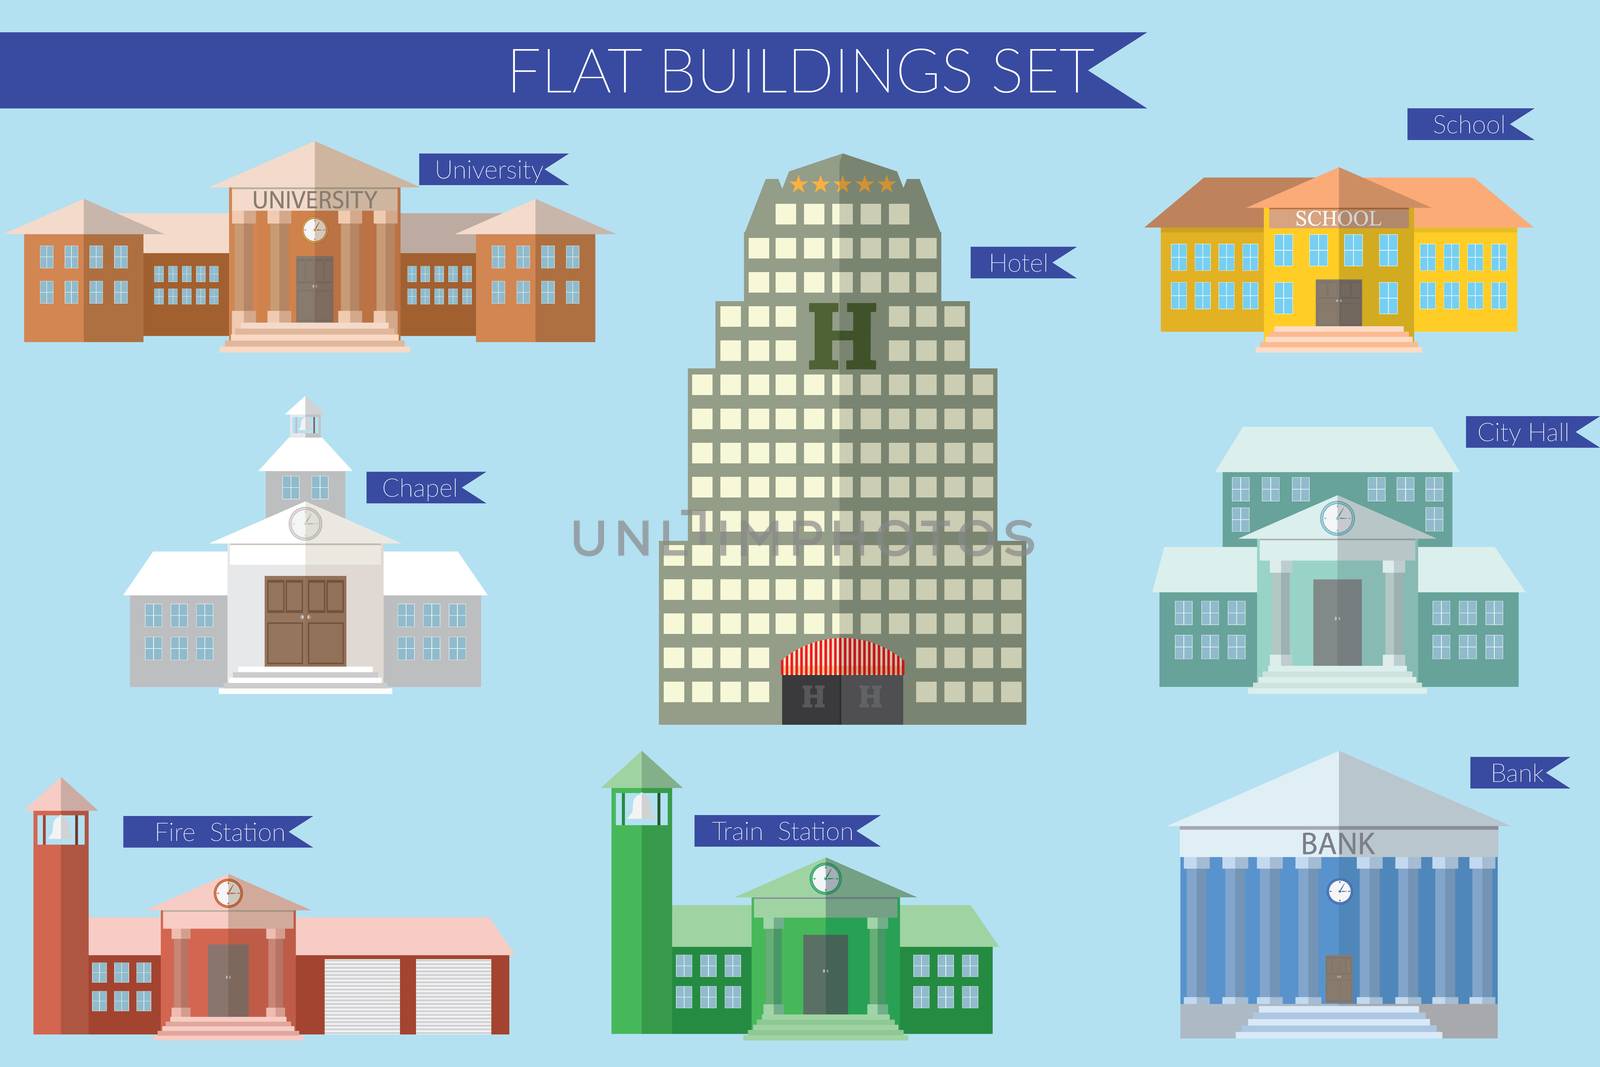 Flat design vector illustration concept for building education icons set. University fire station, bank, city hall, school by Lemon_workshop